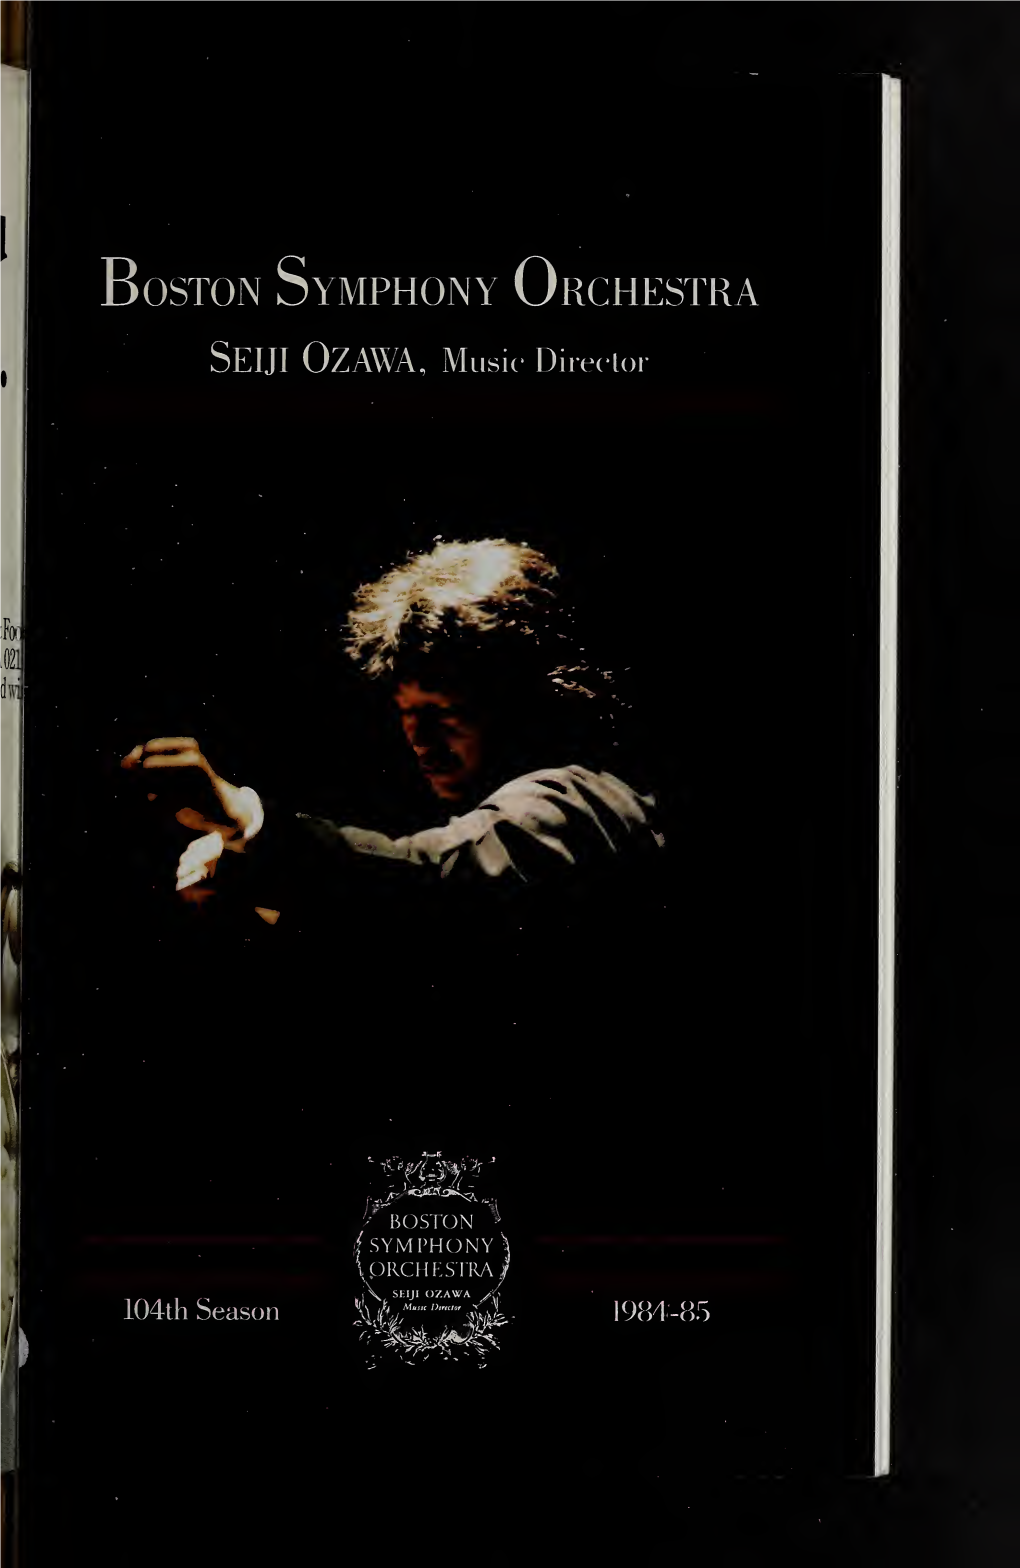 Boston Symphony Orchestra Concert Programs, Season 104, 1984